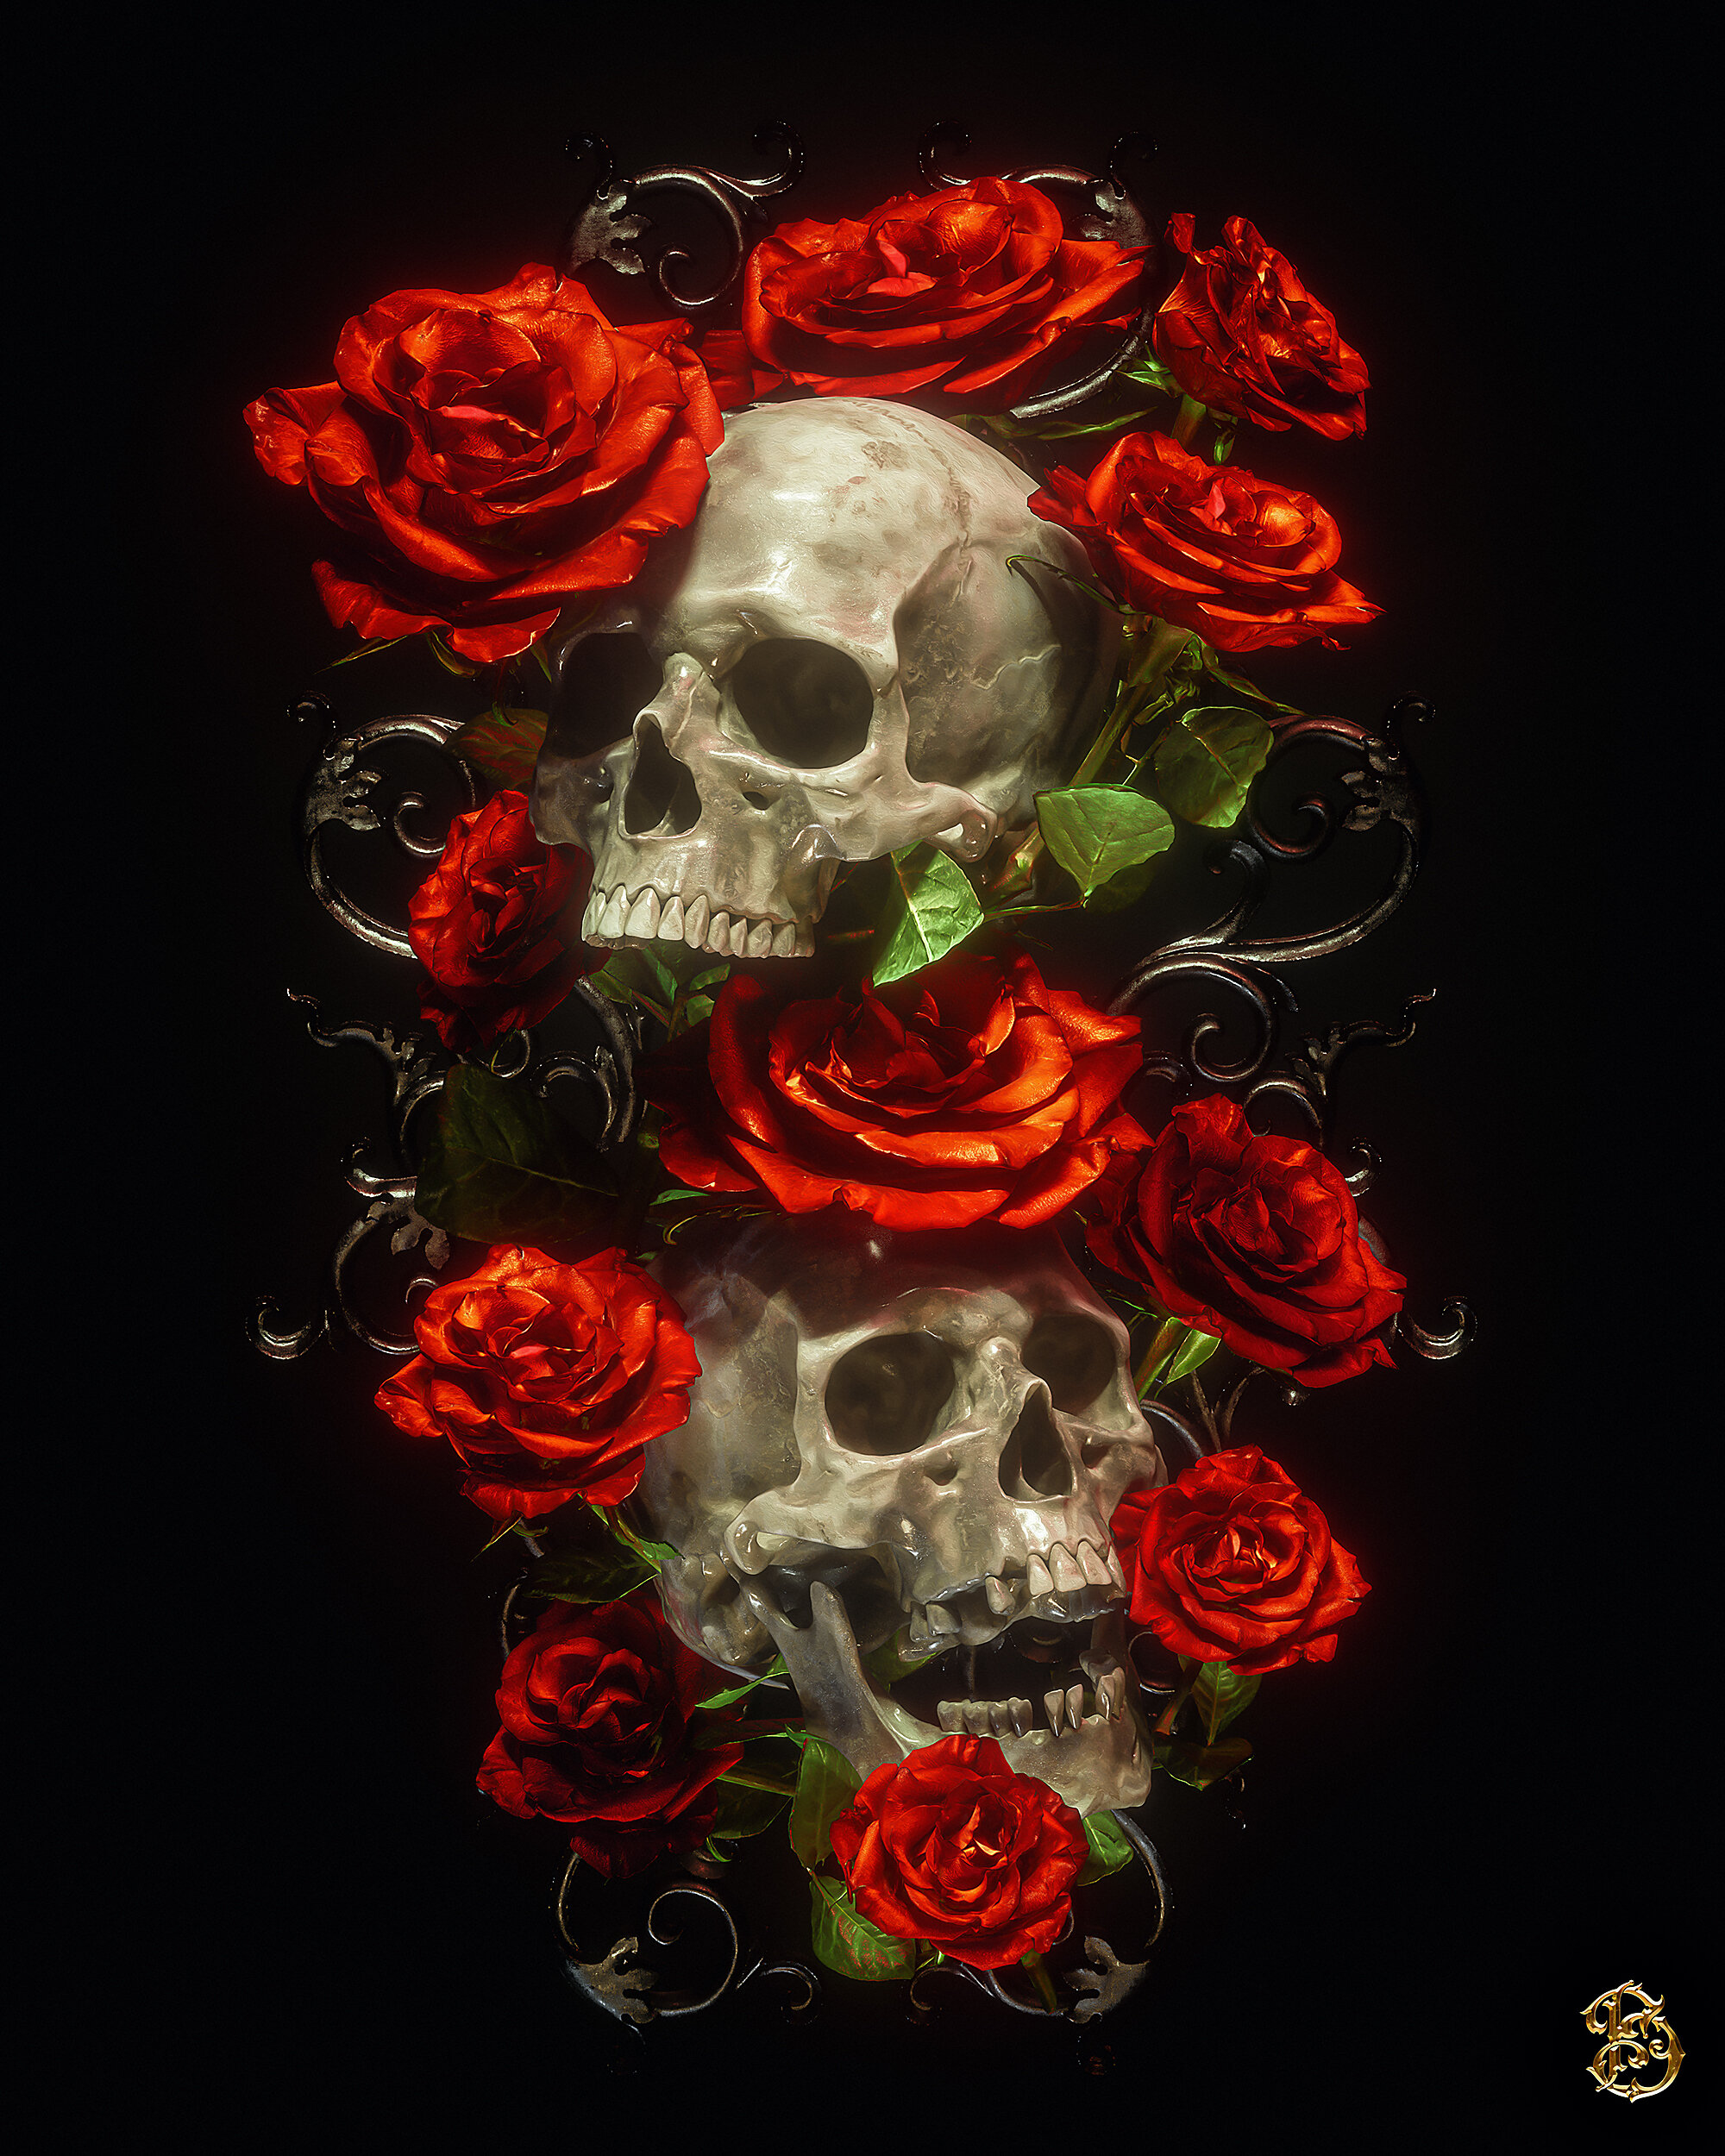 Billelis Dark Religion Death Skull Flowers Red Roses Wallpaper:2000x2500